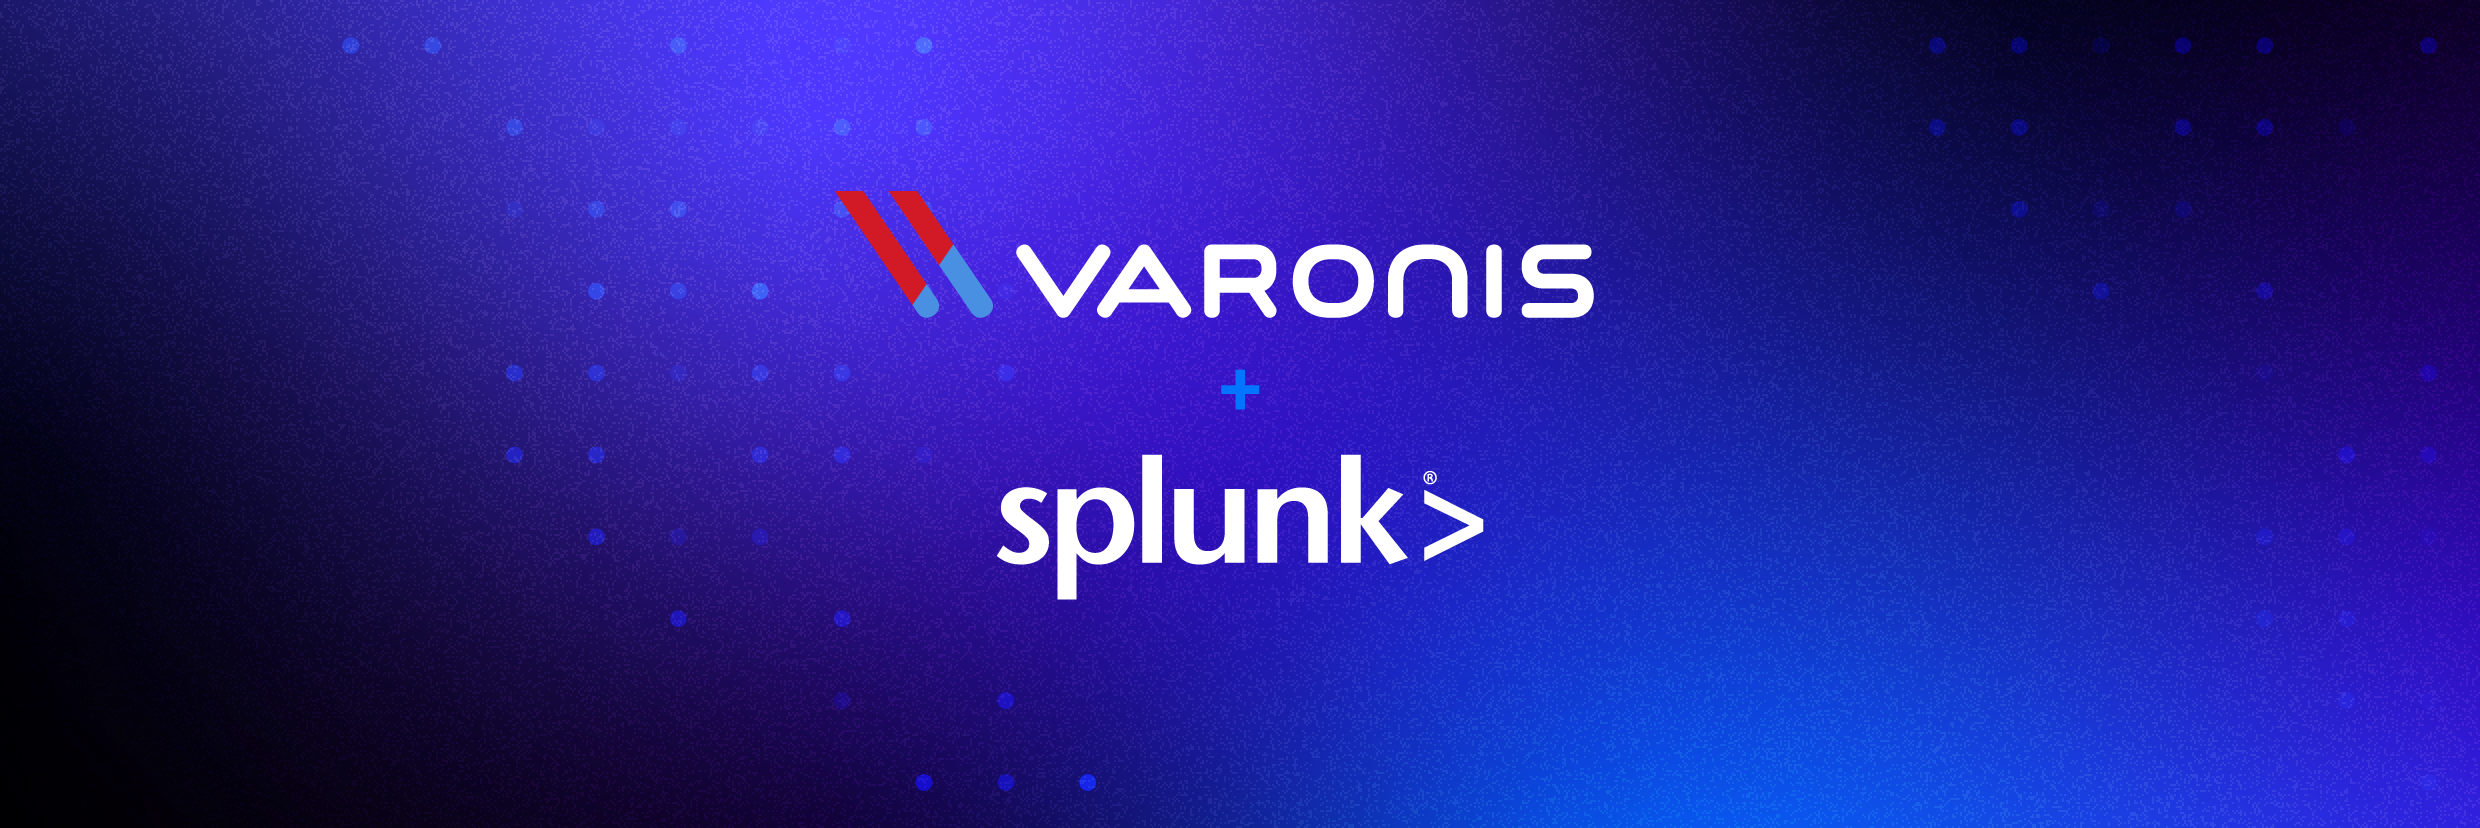 Varonis + Splunk: Epic Threat Detection and Investigations | Varonis